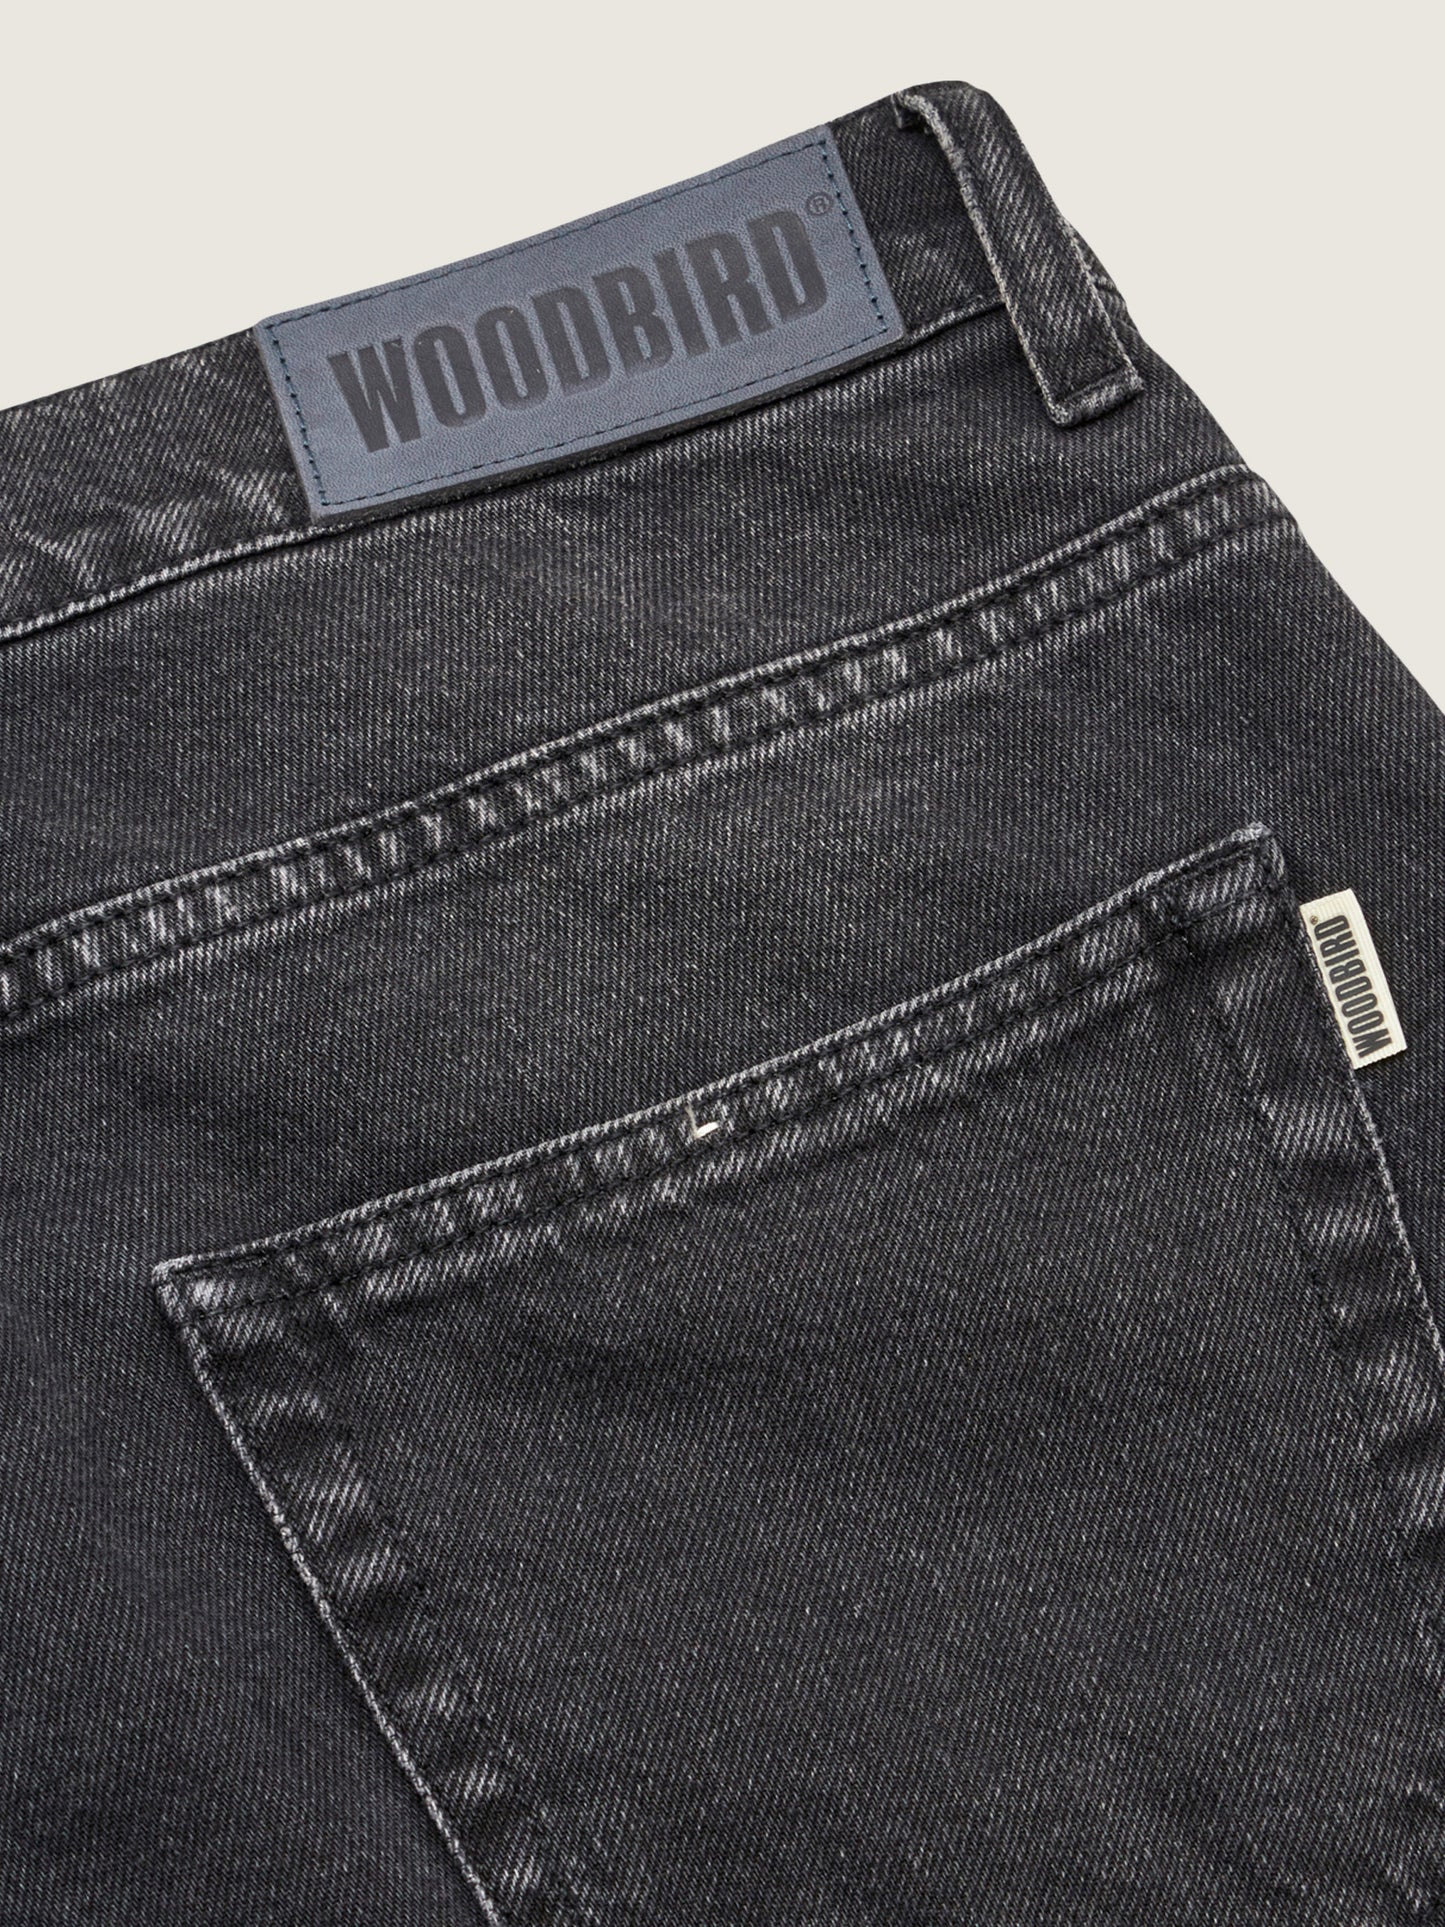 Woodbird WBWik Crow Jeans Jeans Black Vintage